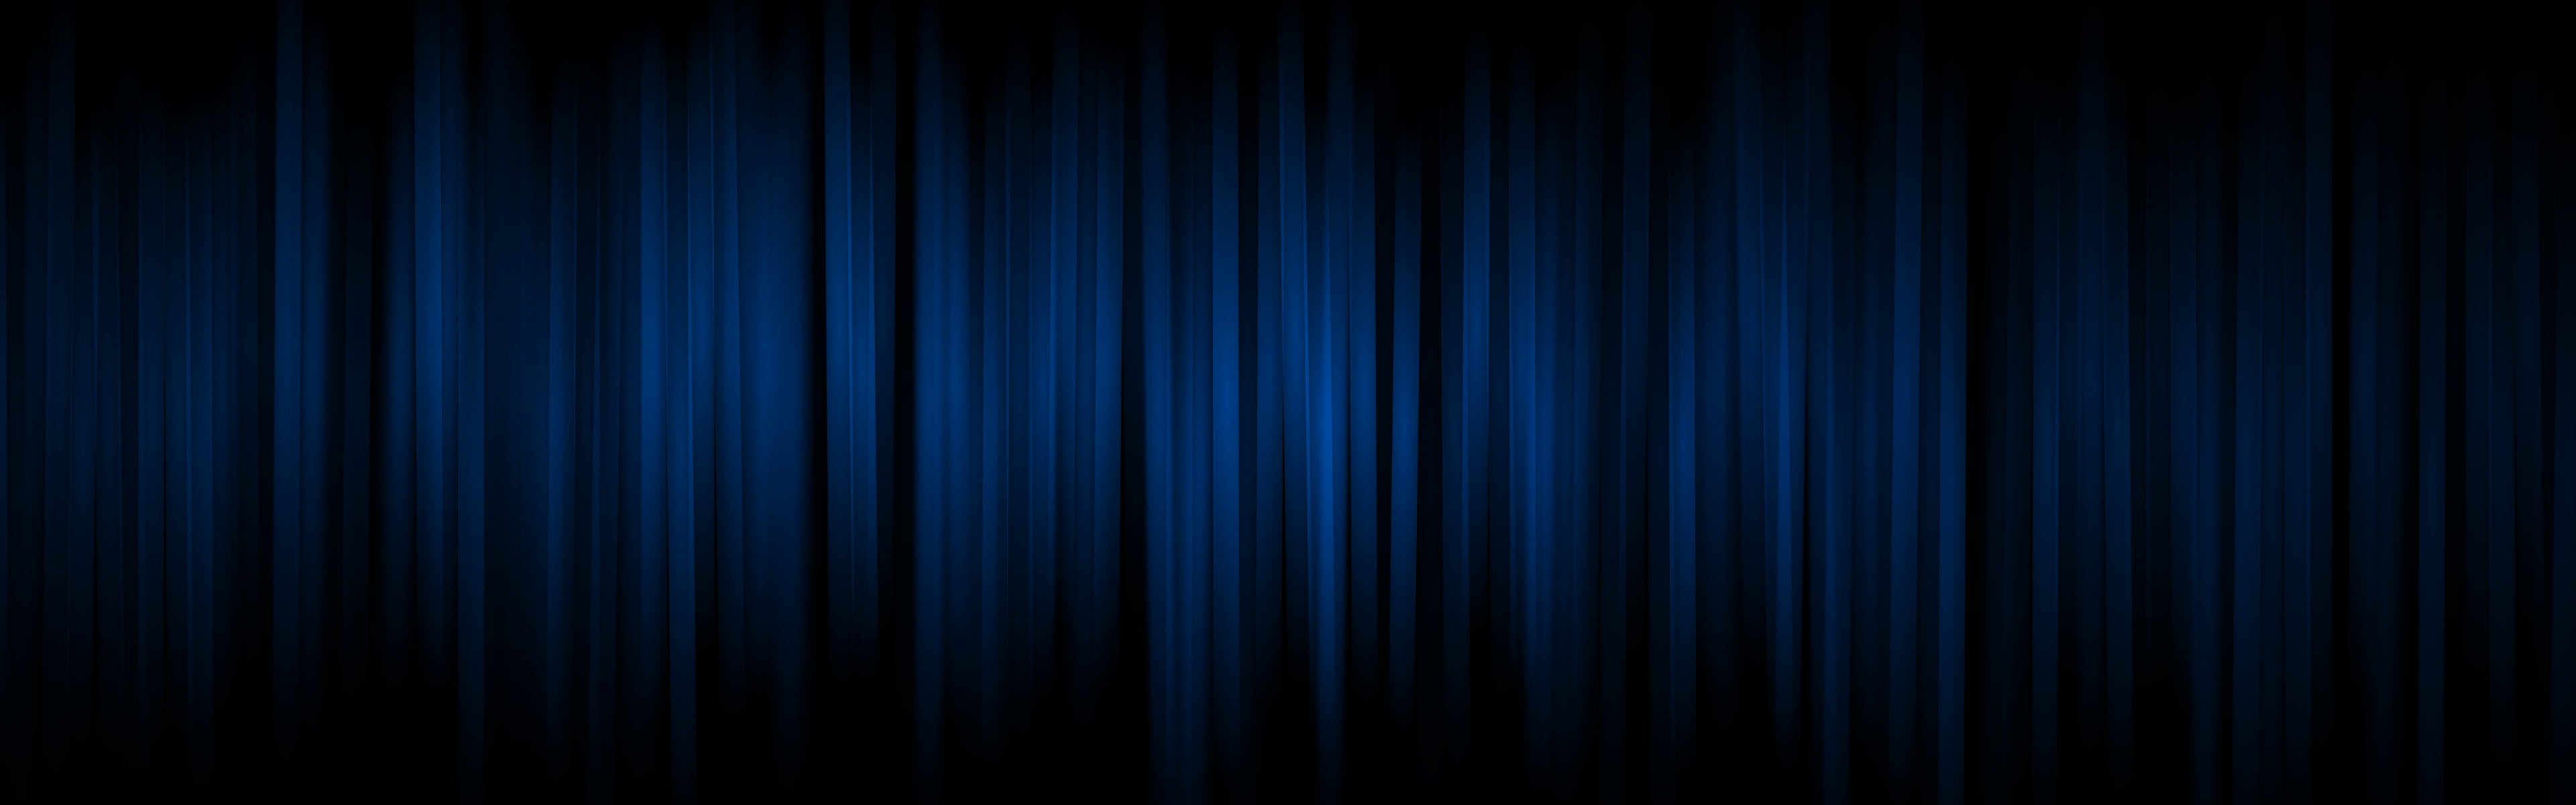 blue and black wallpaper, blue, abstract, shapes, digital art